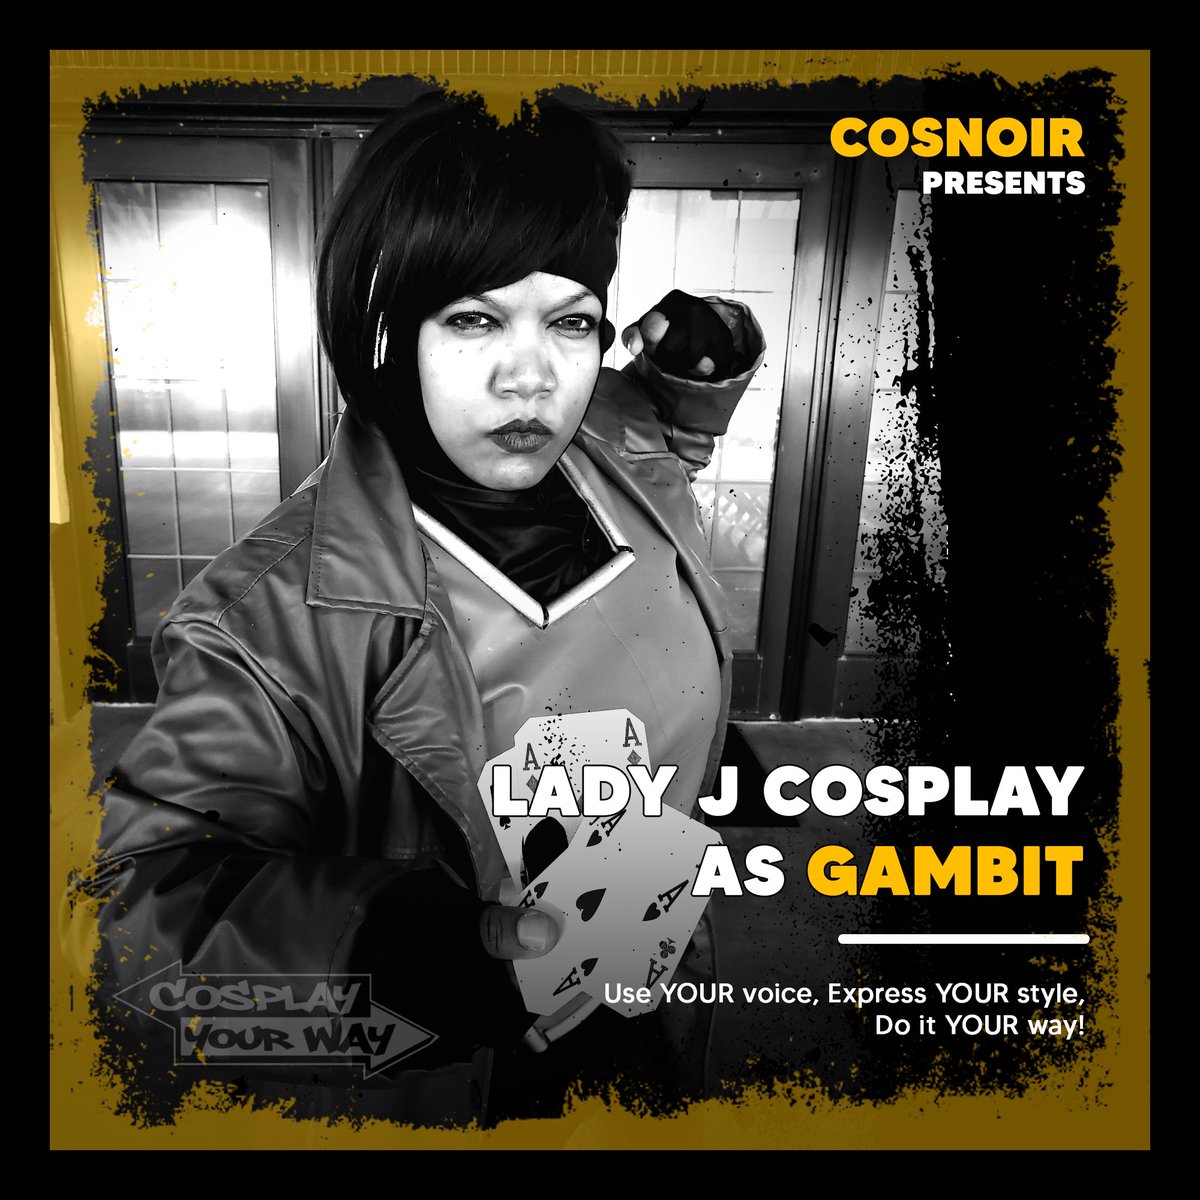 @Cosplay_YourWay presents #COSNOIR: Black & White series with:

Cosplayer: @LadyJ_DNA 
Character: #Gambit

#CosplayYourWay #Cosplay #CosNoir #NerdySexyCool #28DaysOfBlackCosplay #CosplayArtist #Cosplayer #BlackHistoryMonth #gambitcosplay #xmen #womenofcosplay #marvel #mutant